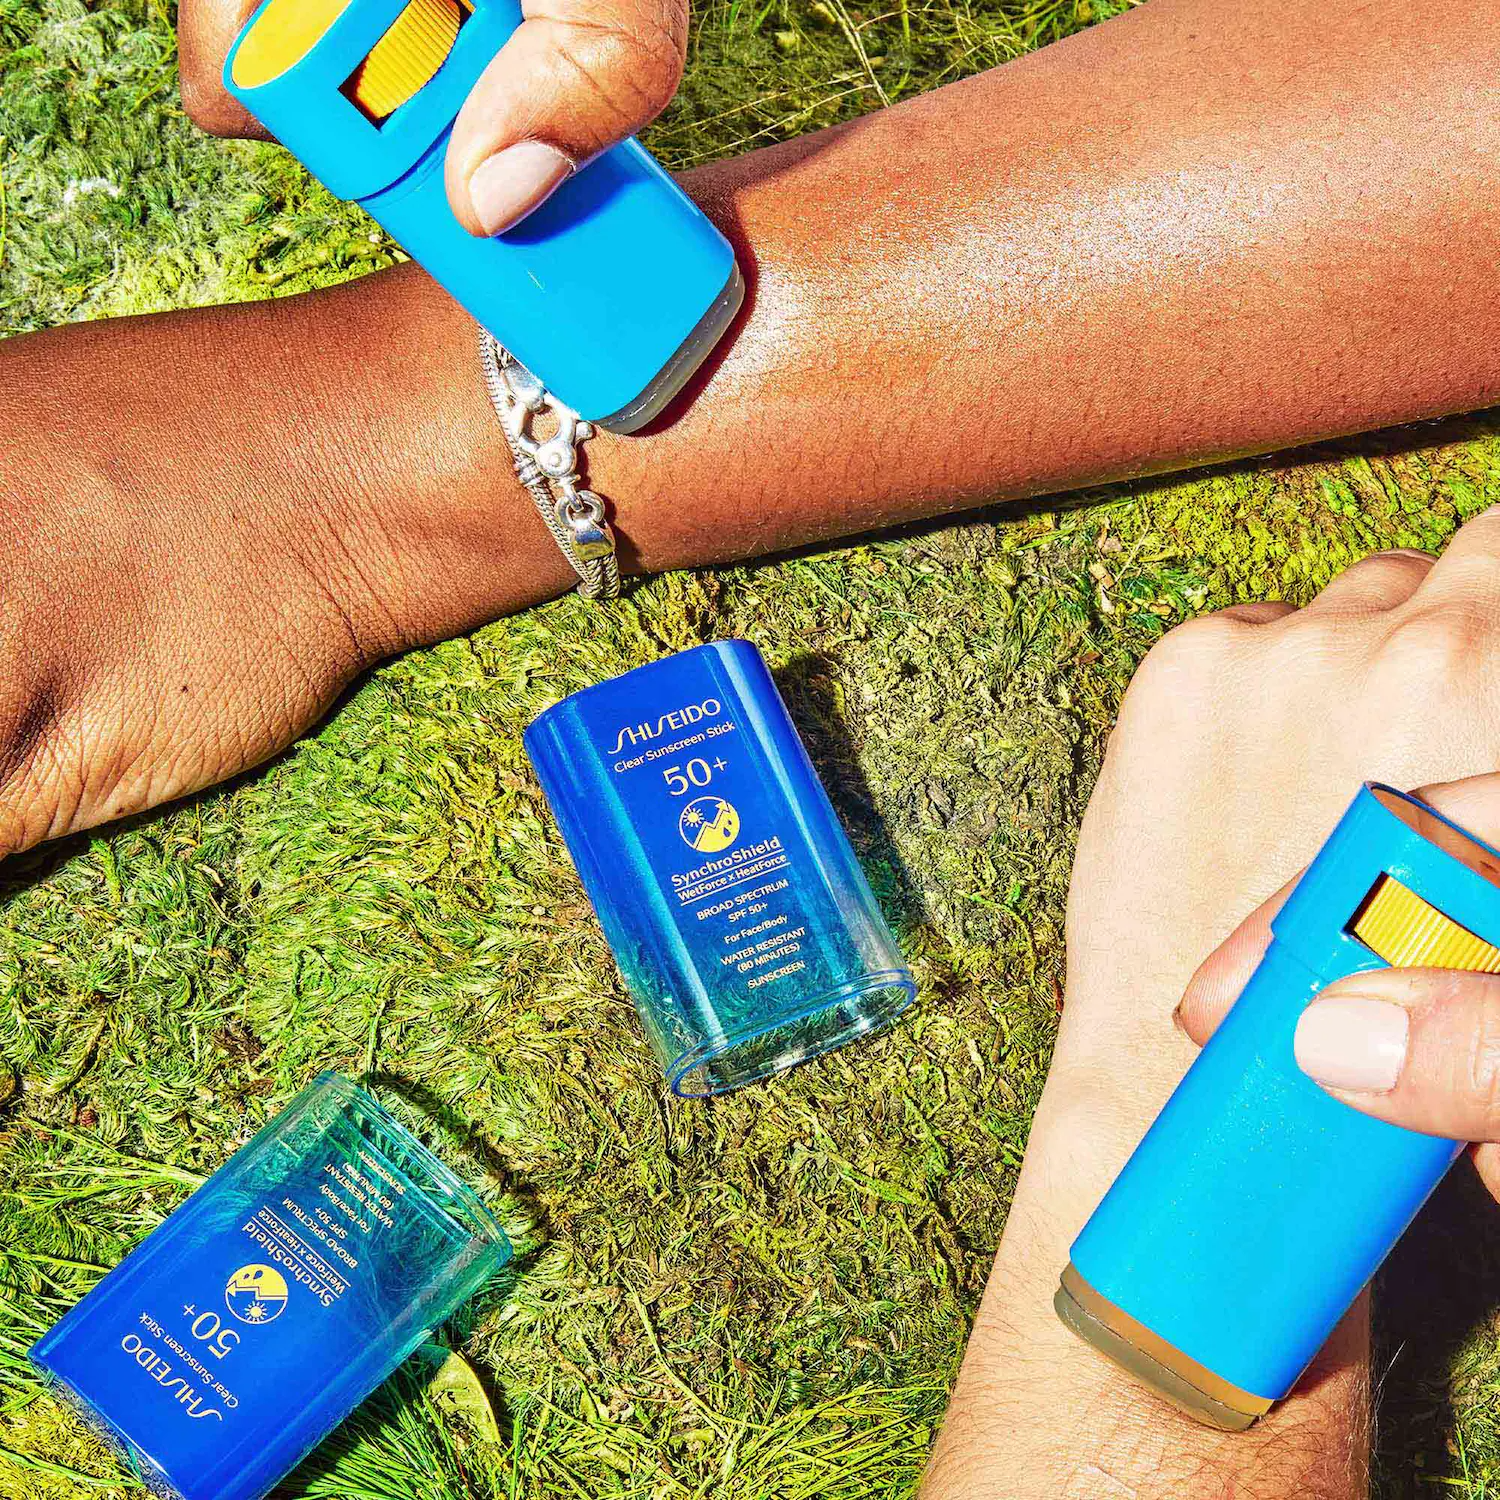 6 of the best sunscreen sticks according to TikTok - RUSSH